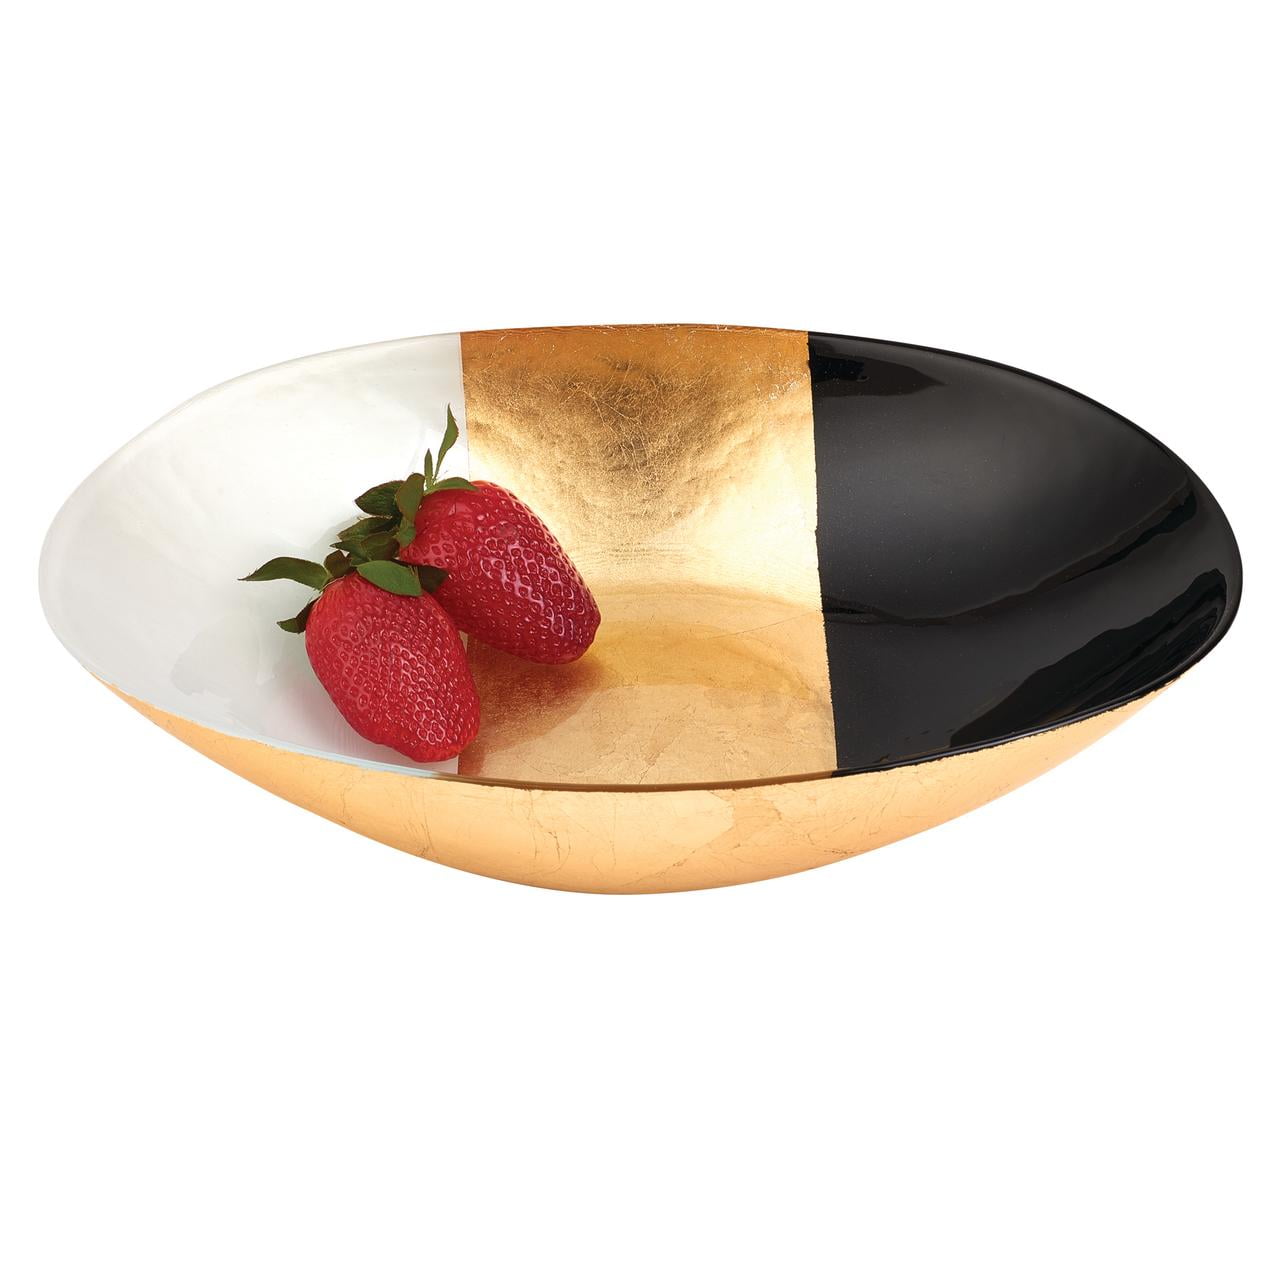 Luxury Import 6in Oval Decorative Fruit/Candy Bowl Silver Leaf Snakeskin Design 